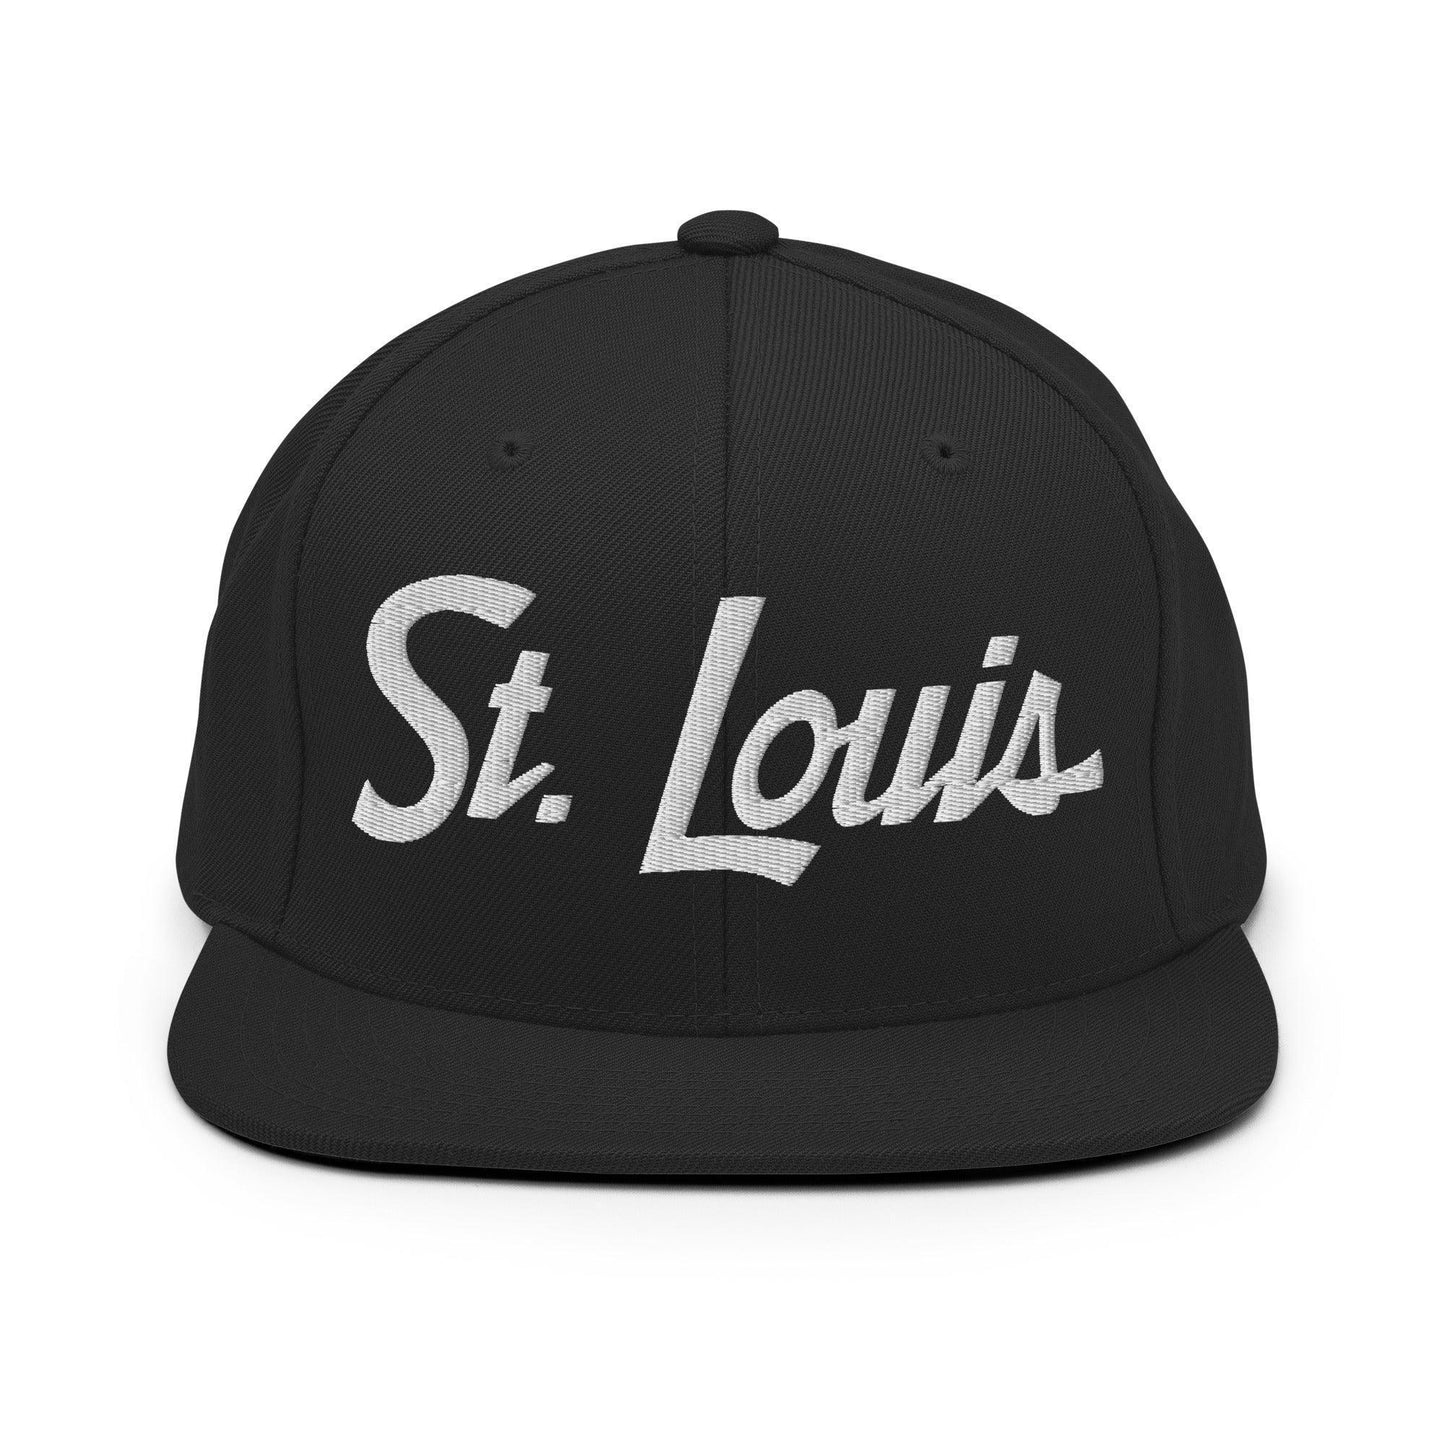 St. Louis Script Snapback Hat Black